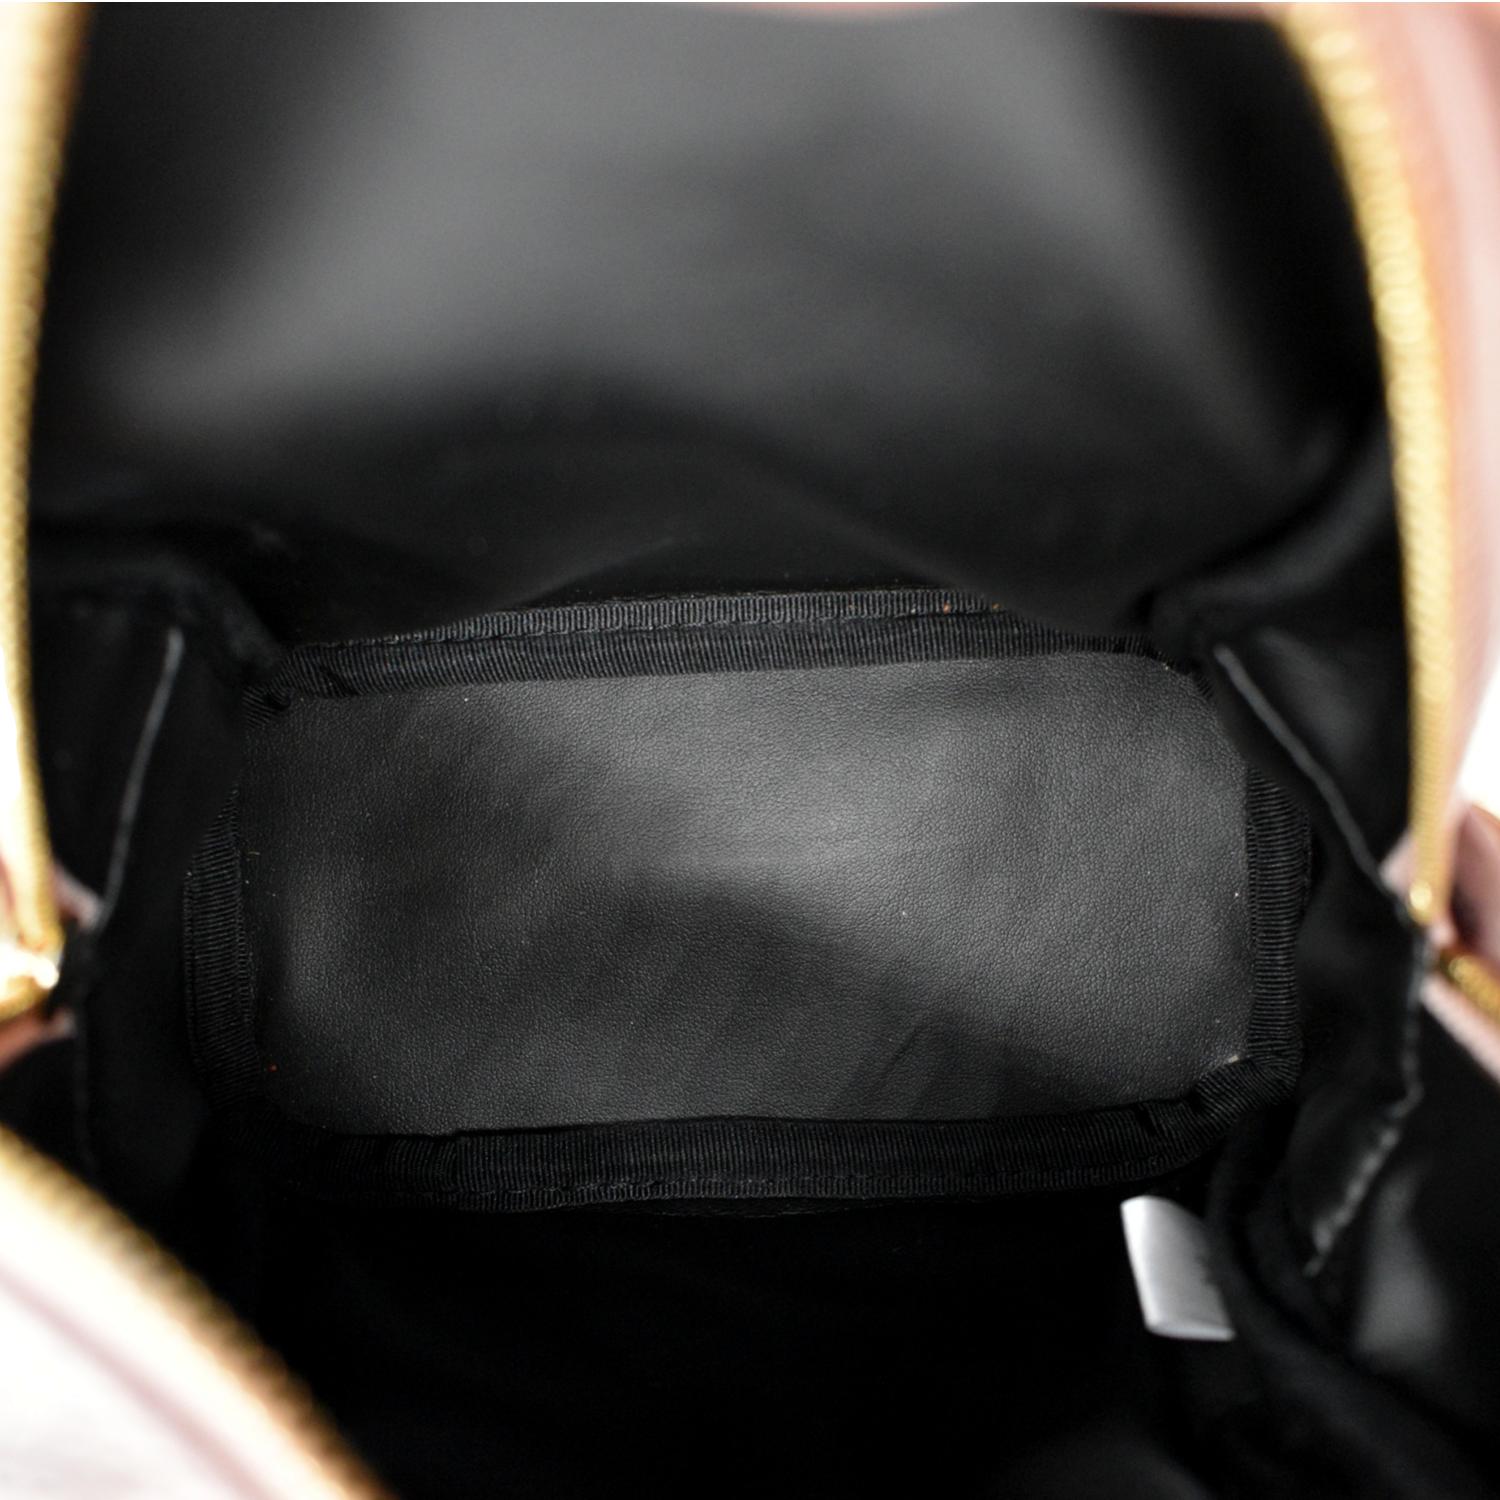 Pink Mcm Backpack - 2 For Sale on 1stDibs  pink mcm bag, pink mcm backpack  mini, mcm pink backpack